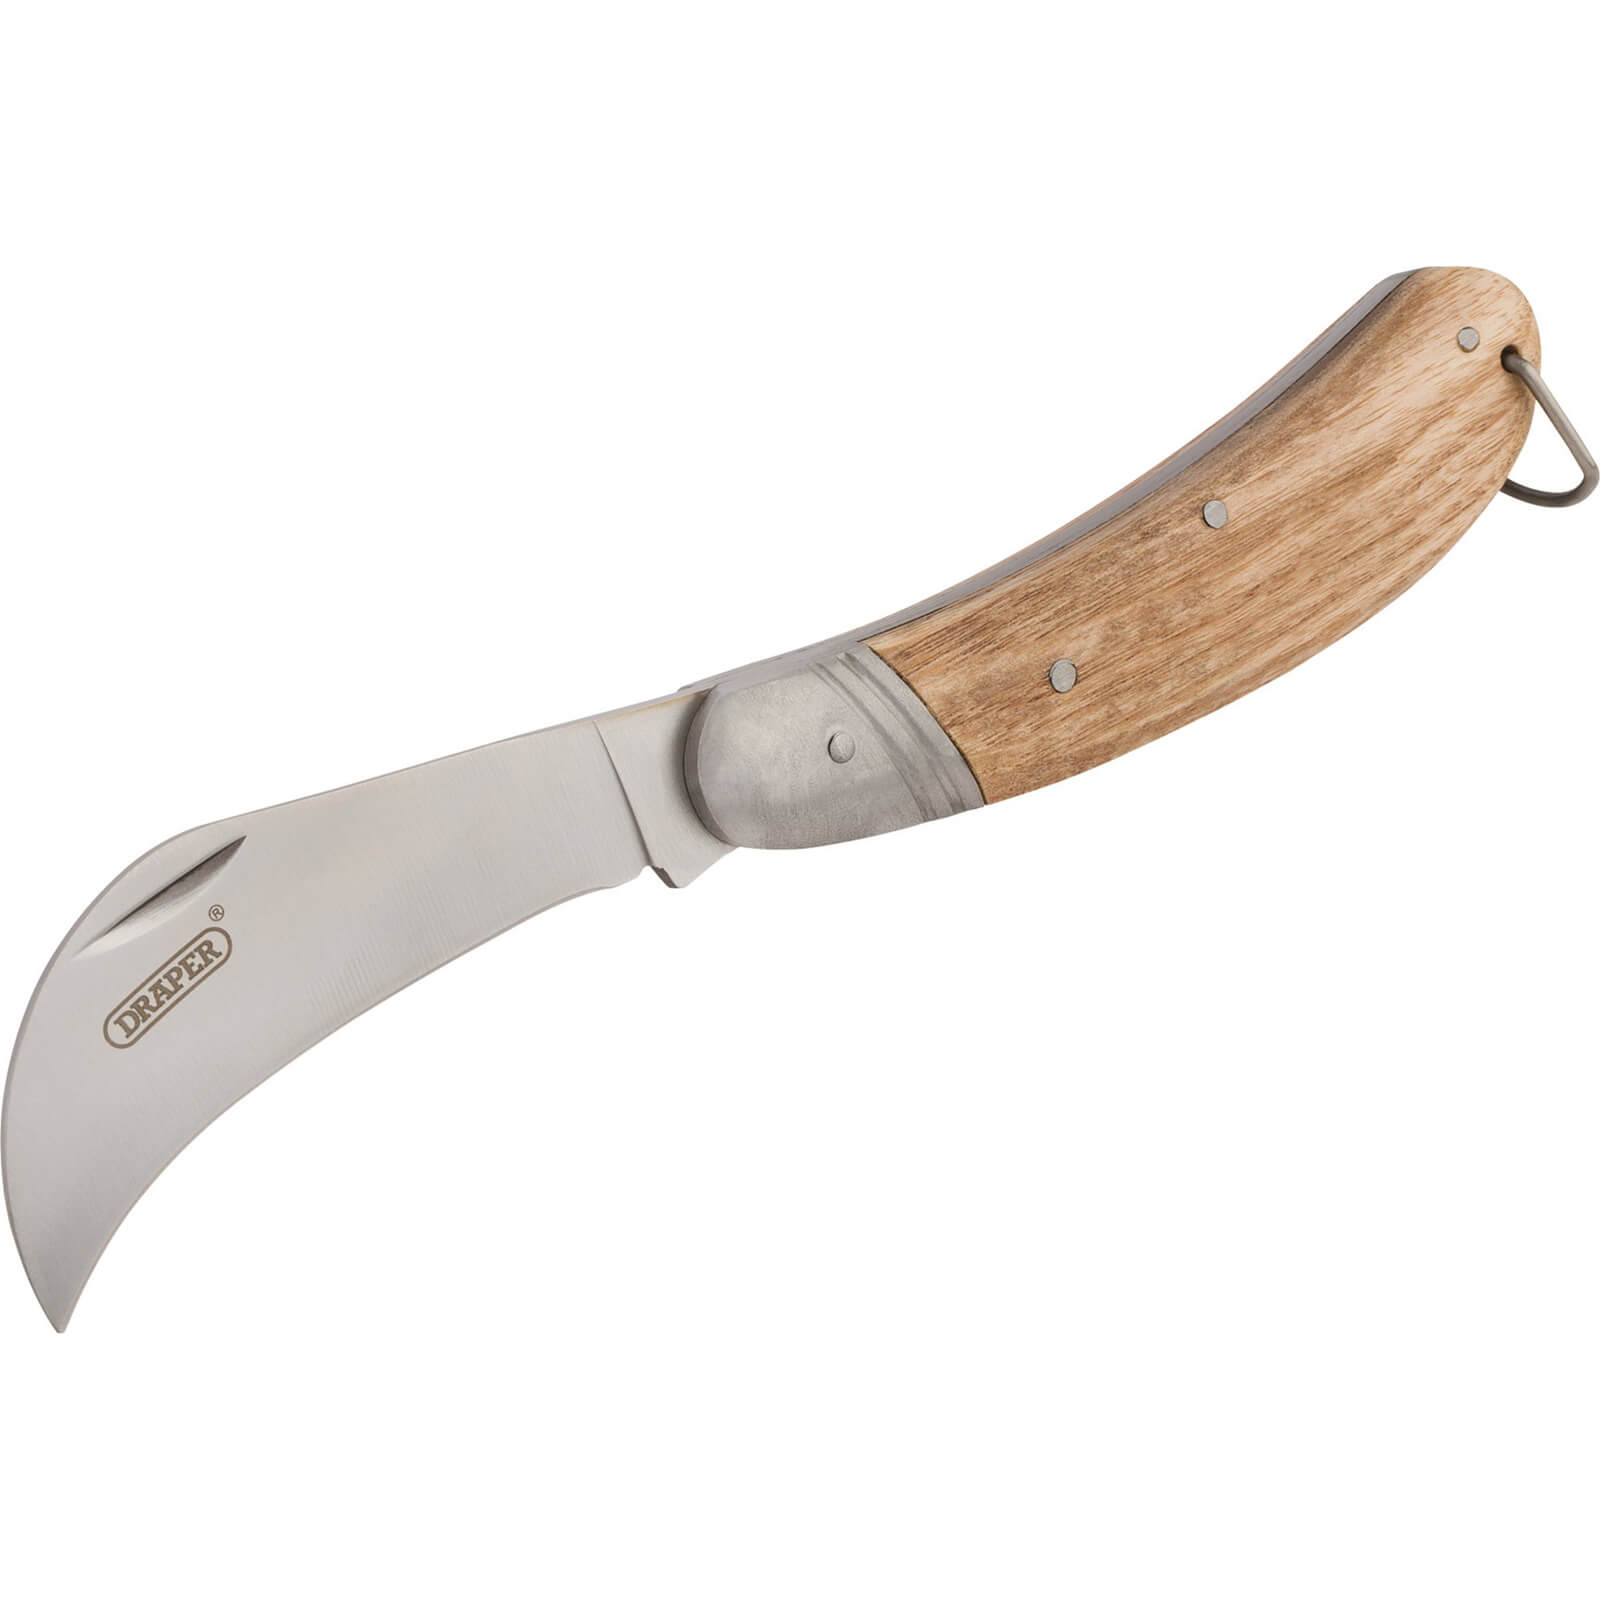 Photo of Draper Budding Knife Fsc Certified Oak Handle